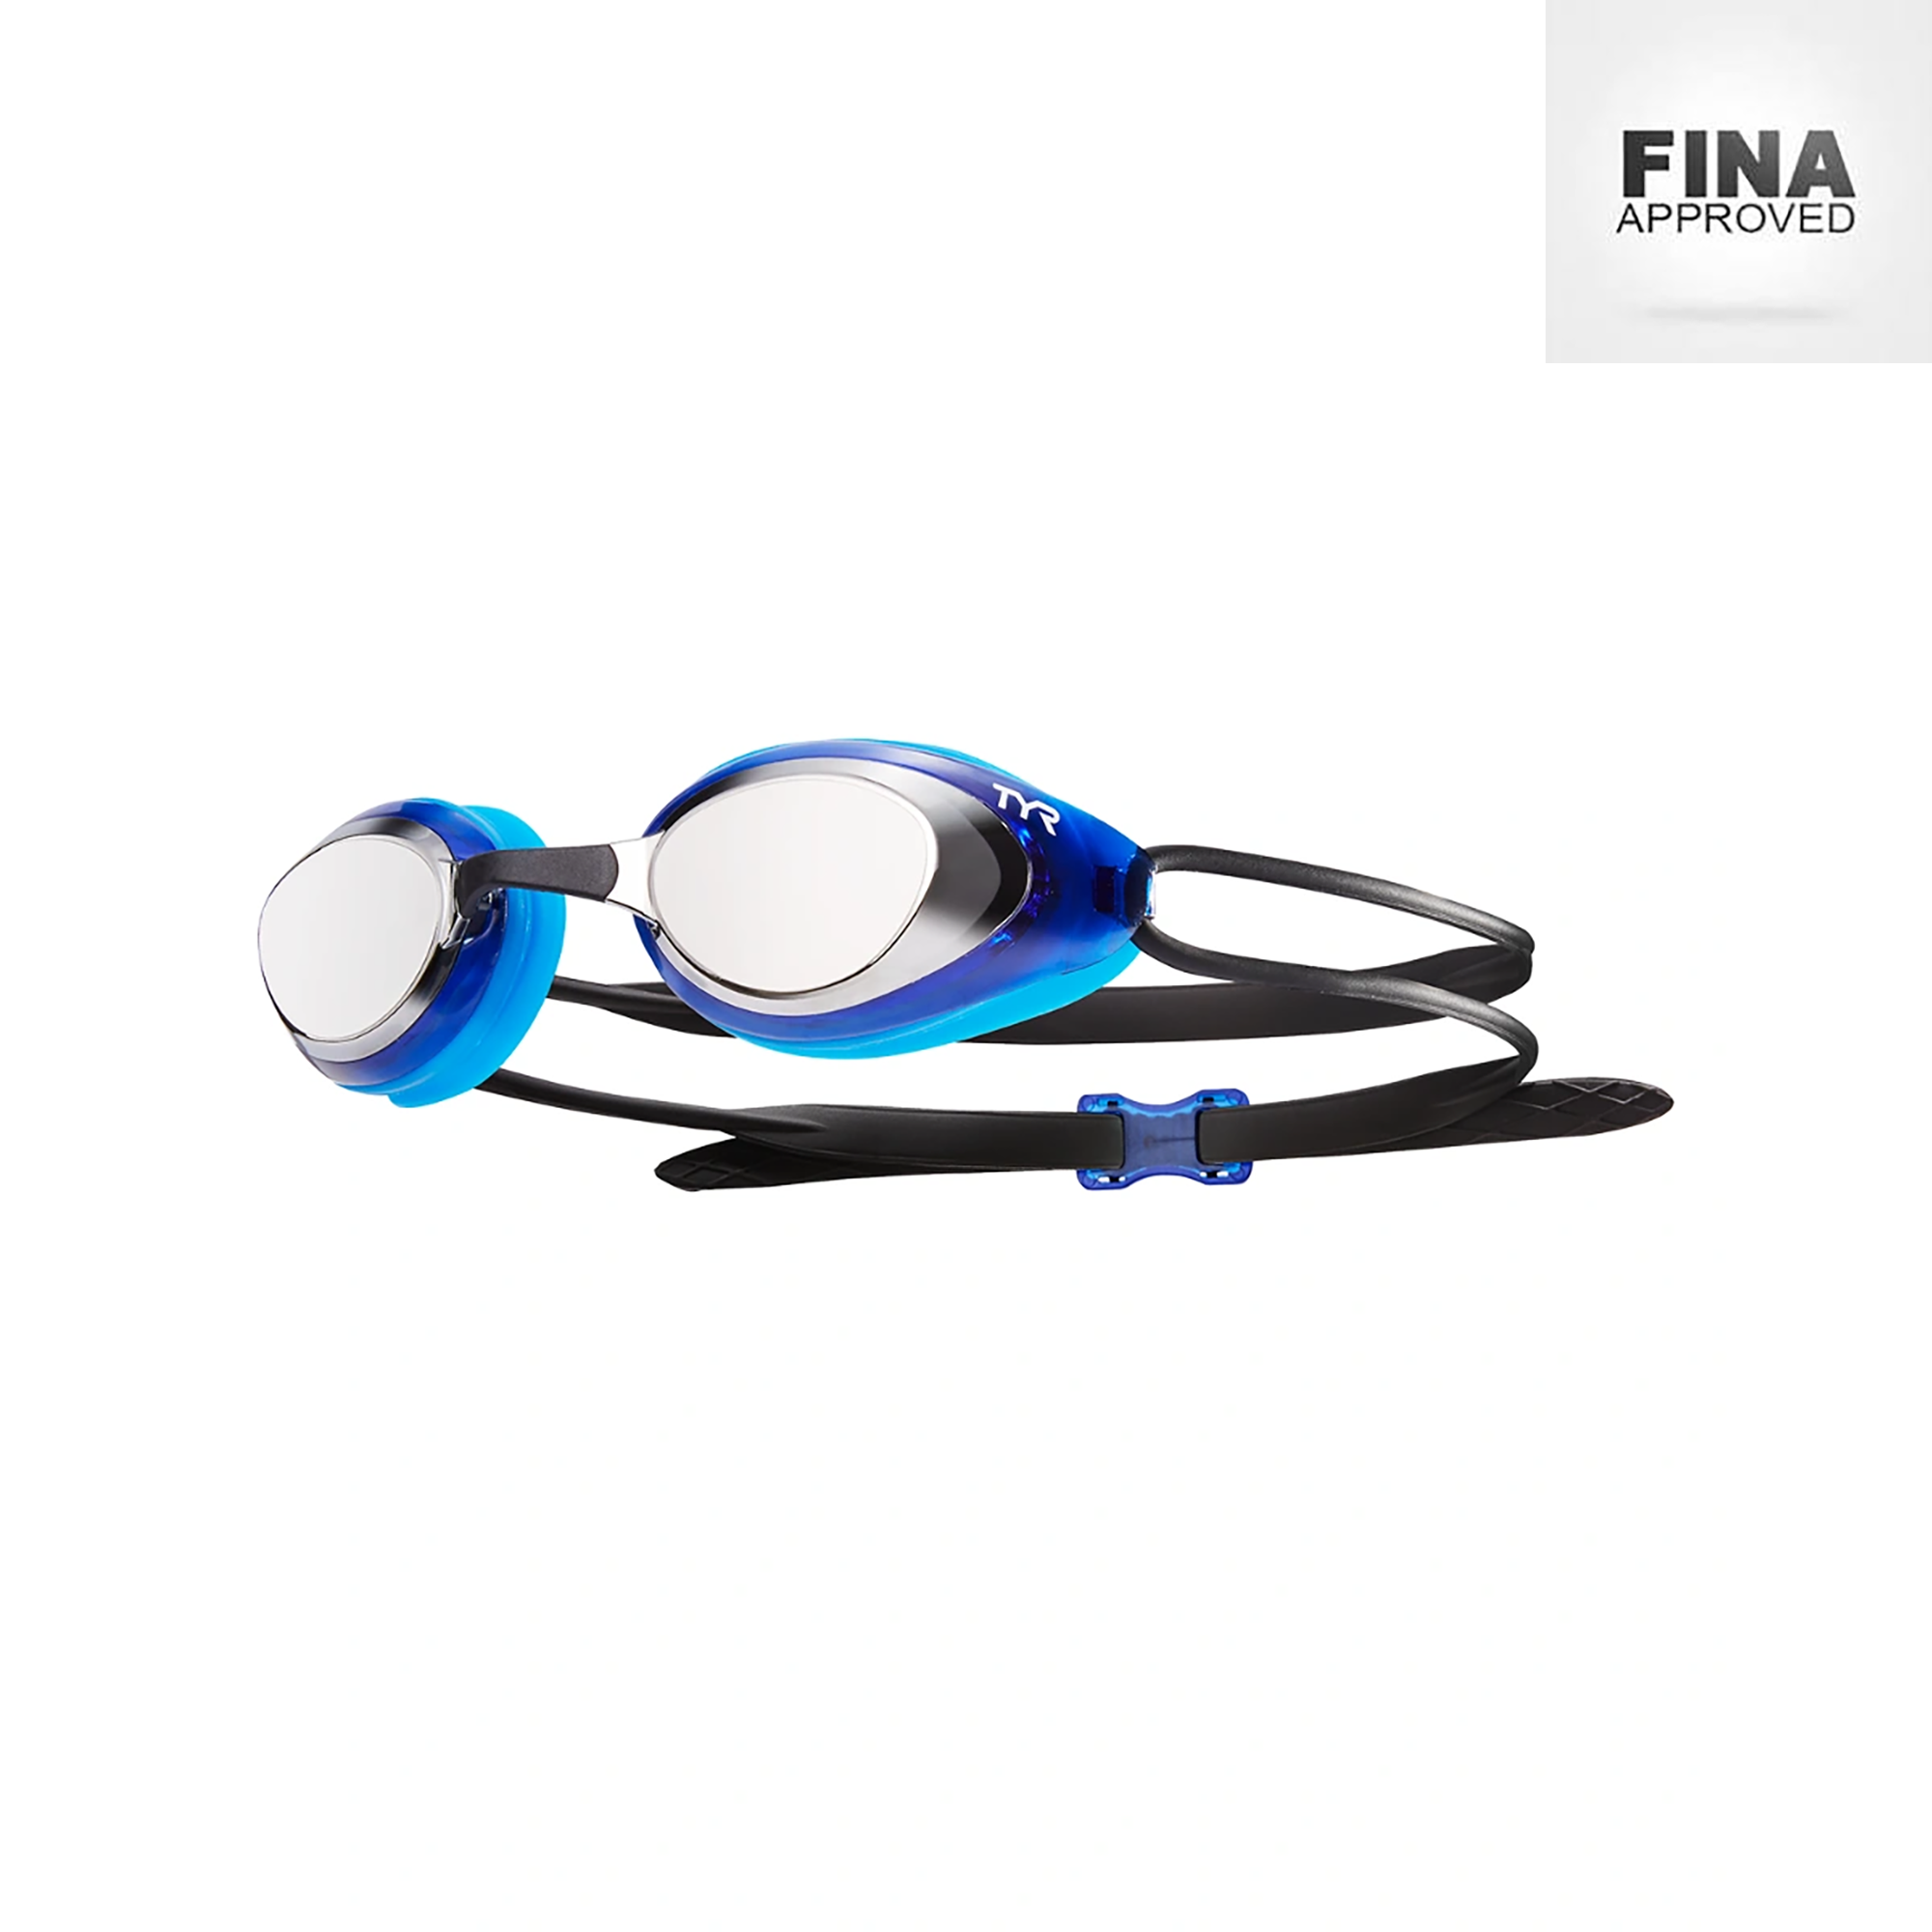 TYR Adult Blackhawk Mirrored Racing Goggles (Silver/Blue/Black)